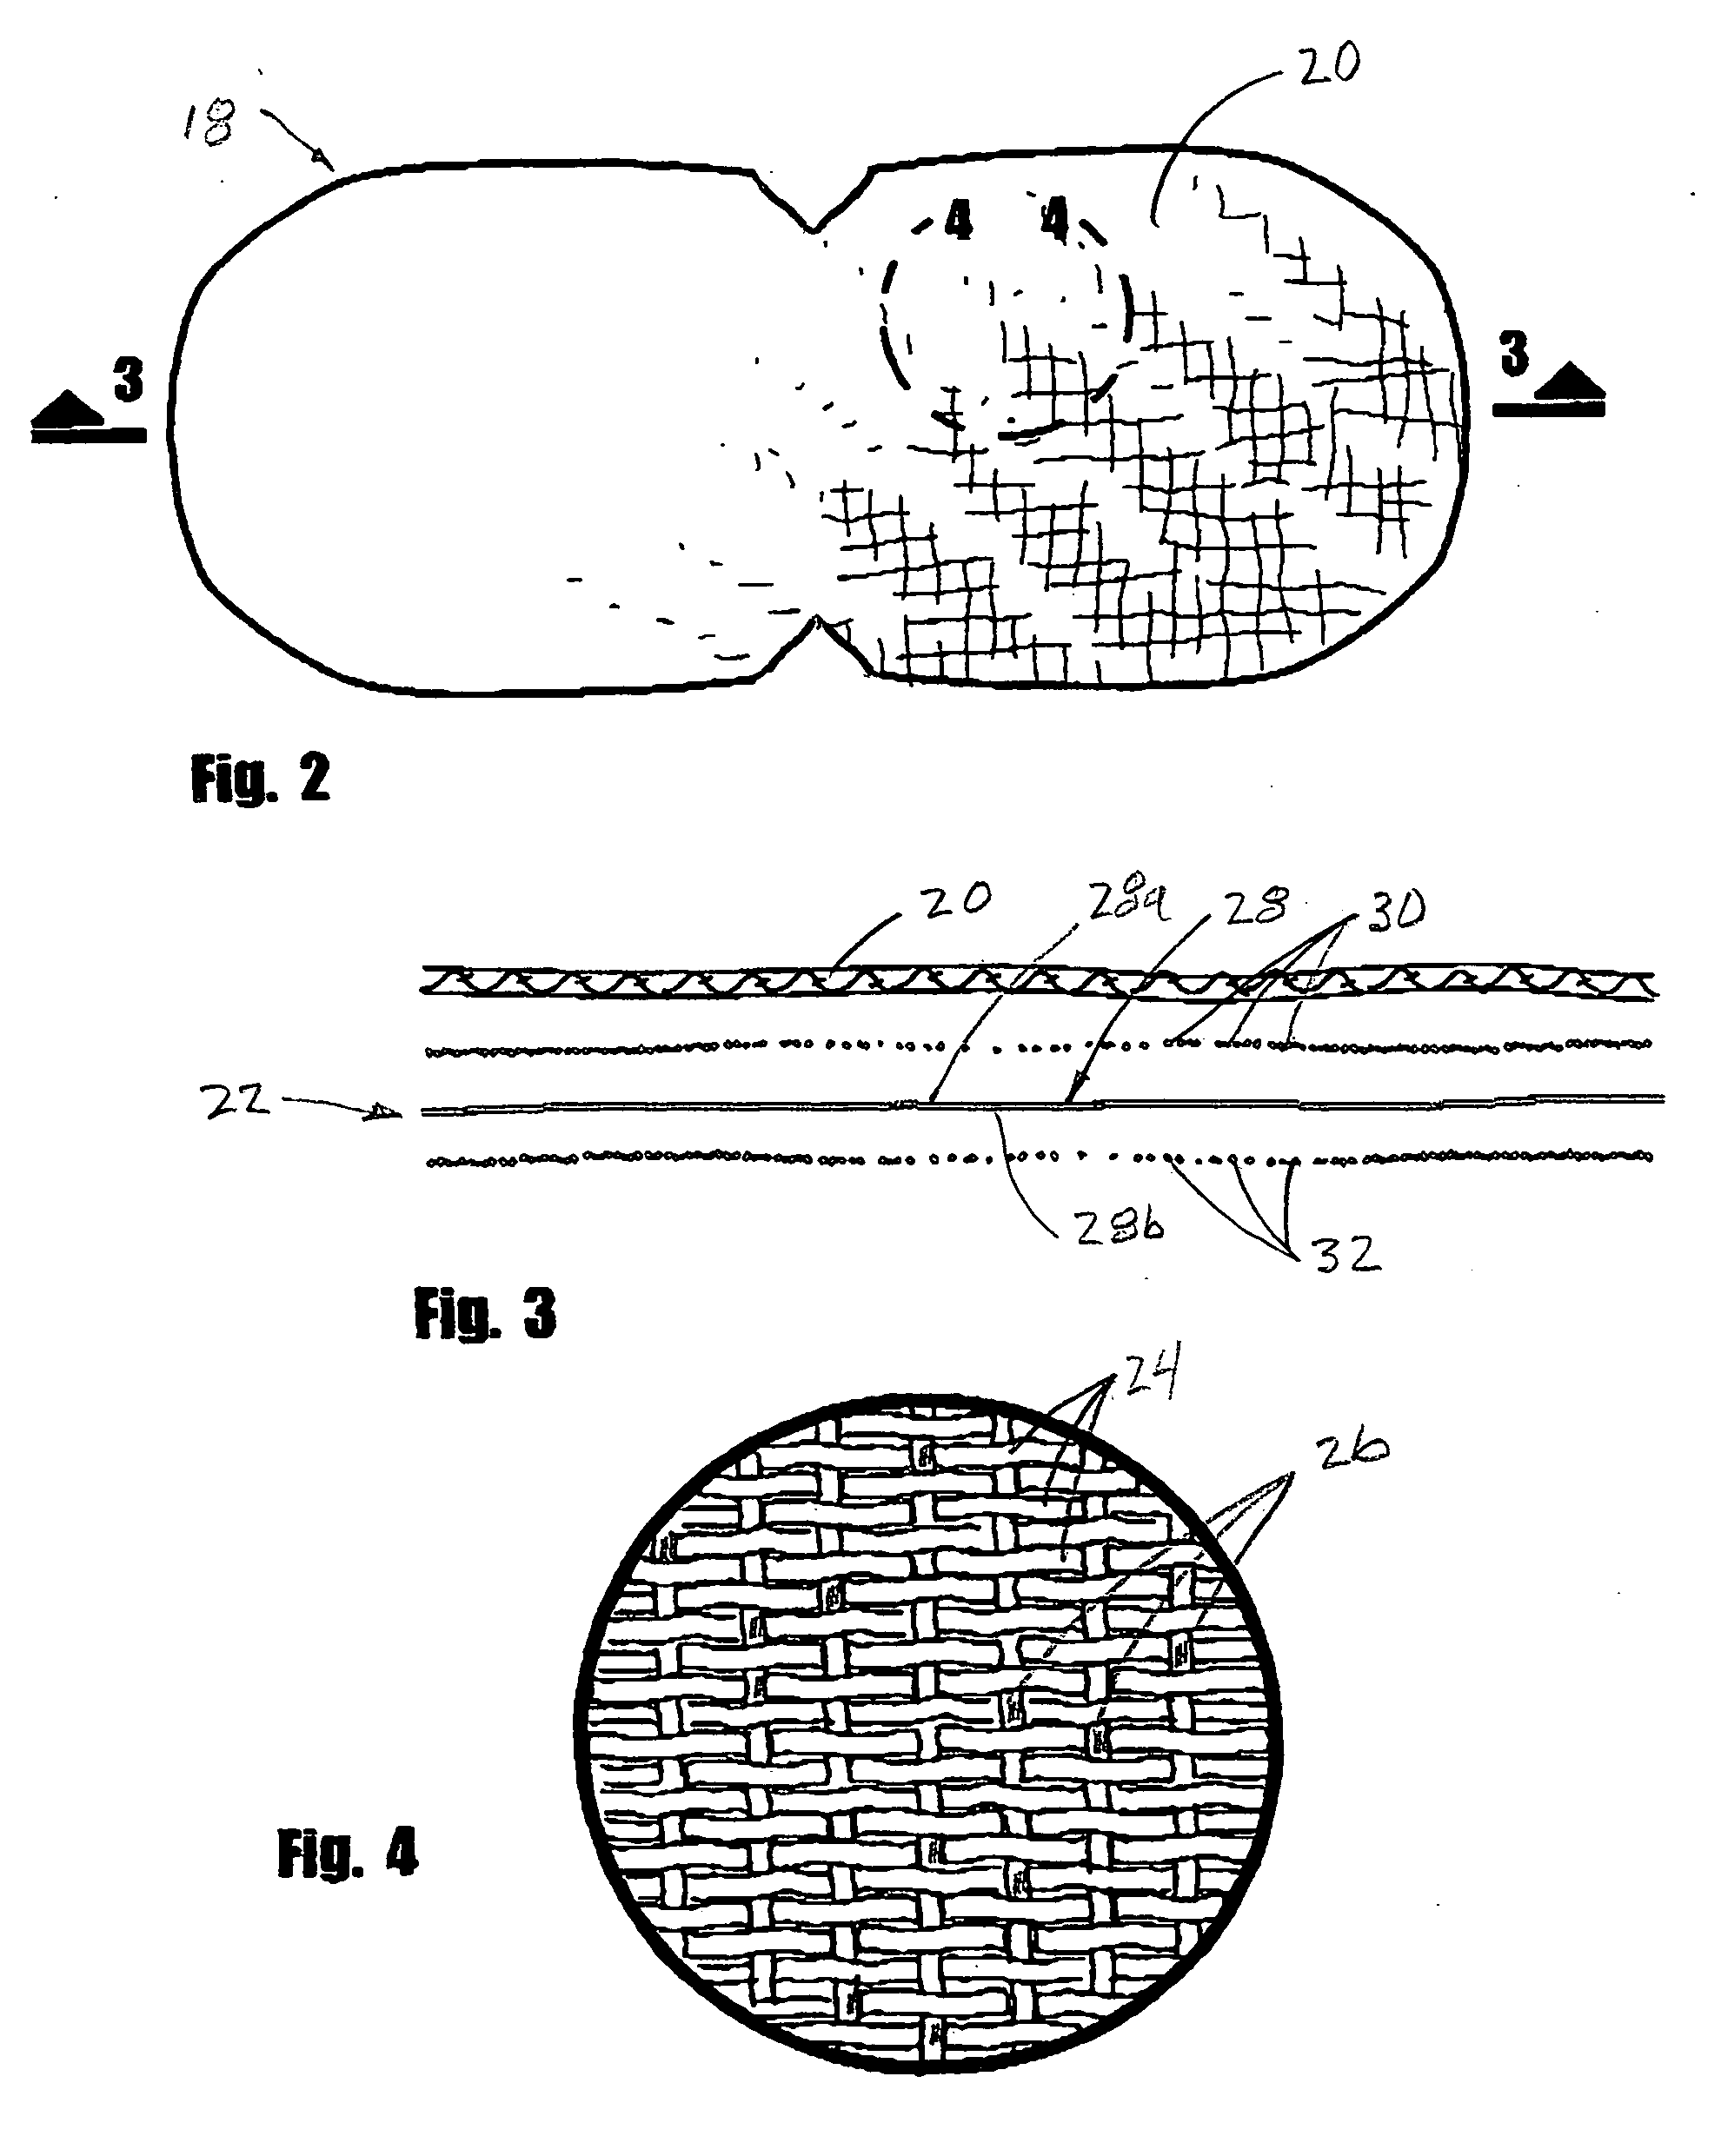 Perspiration shield and method of making same